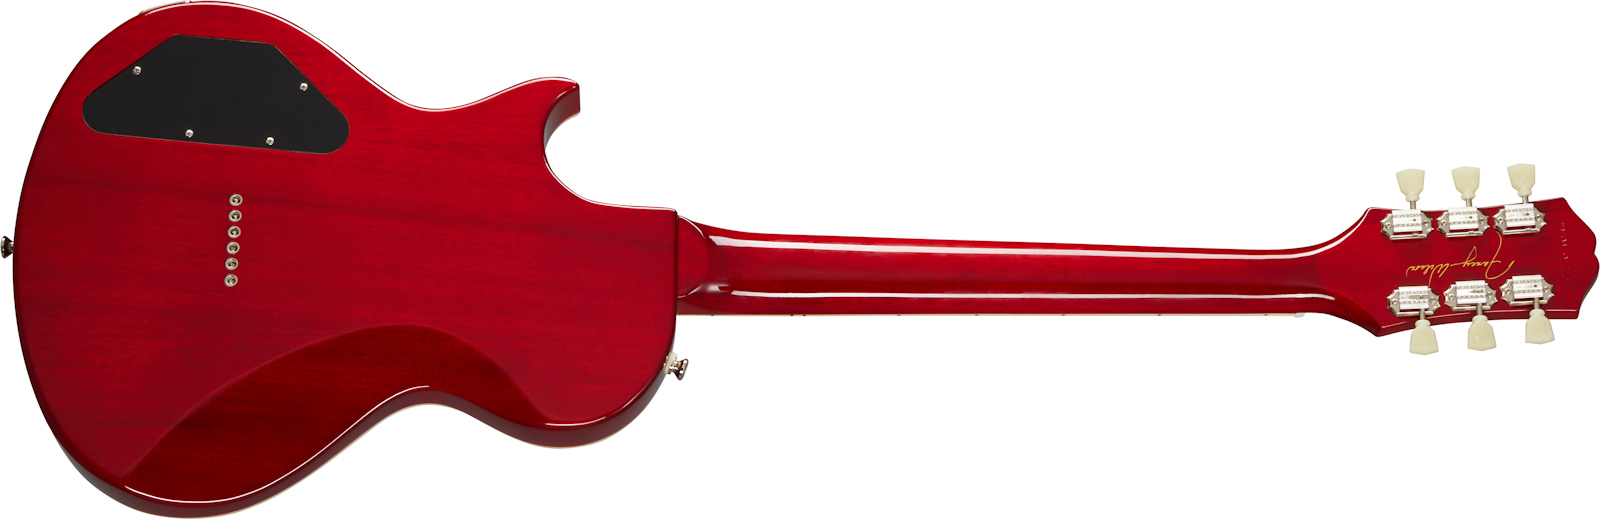 Epiphone Nancy Wilson Fanatic Signature Hmh Ht Eb - Fireburst - Enkel gesneden elektrische gitaar - Variation 1